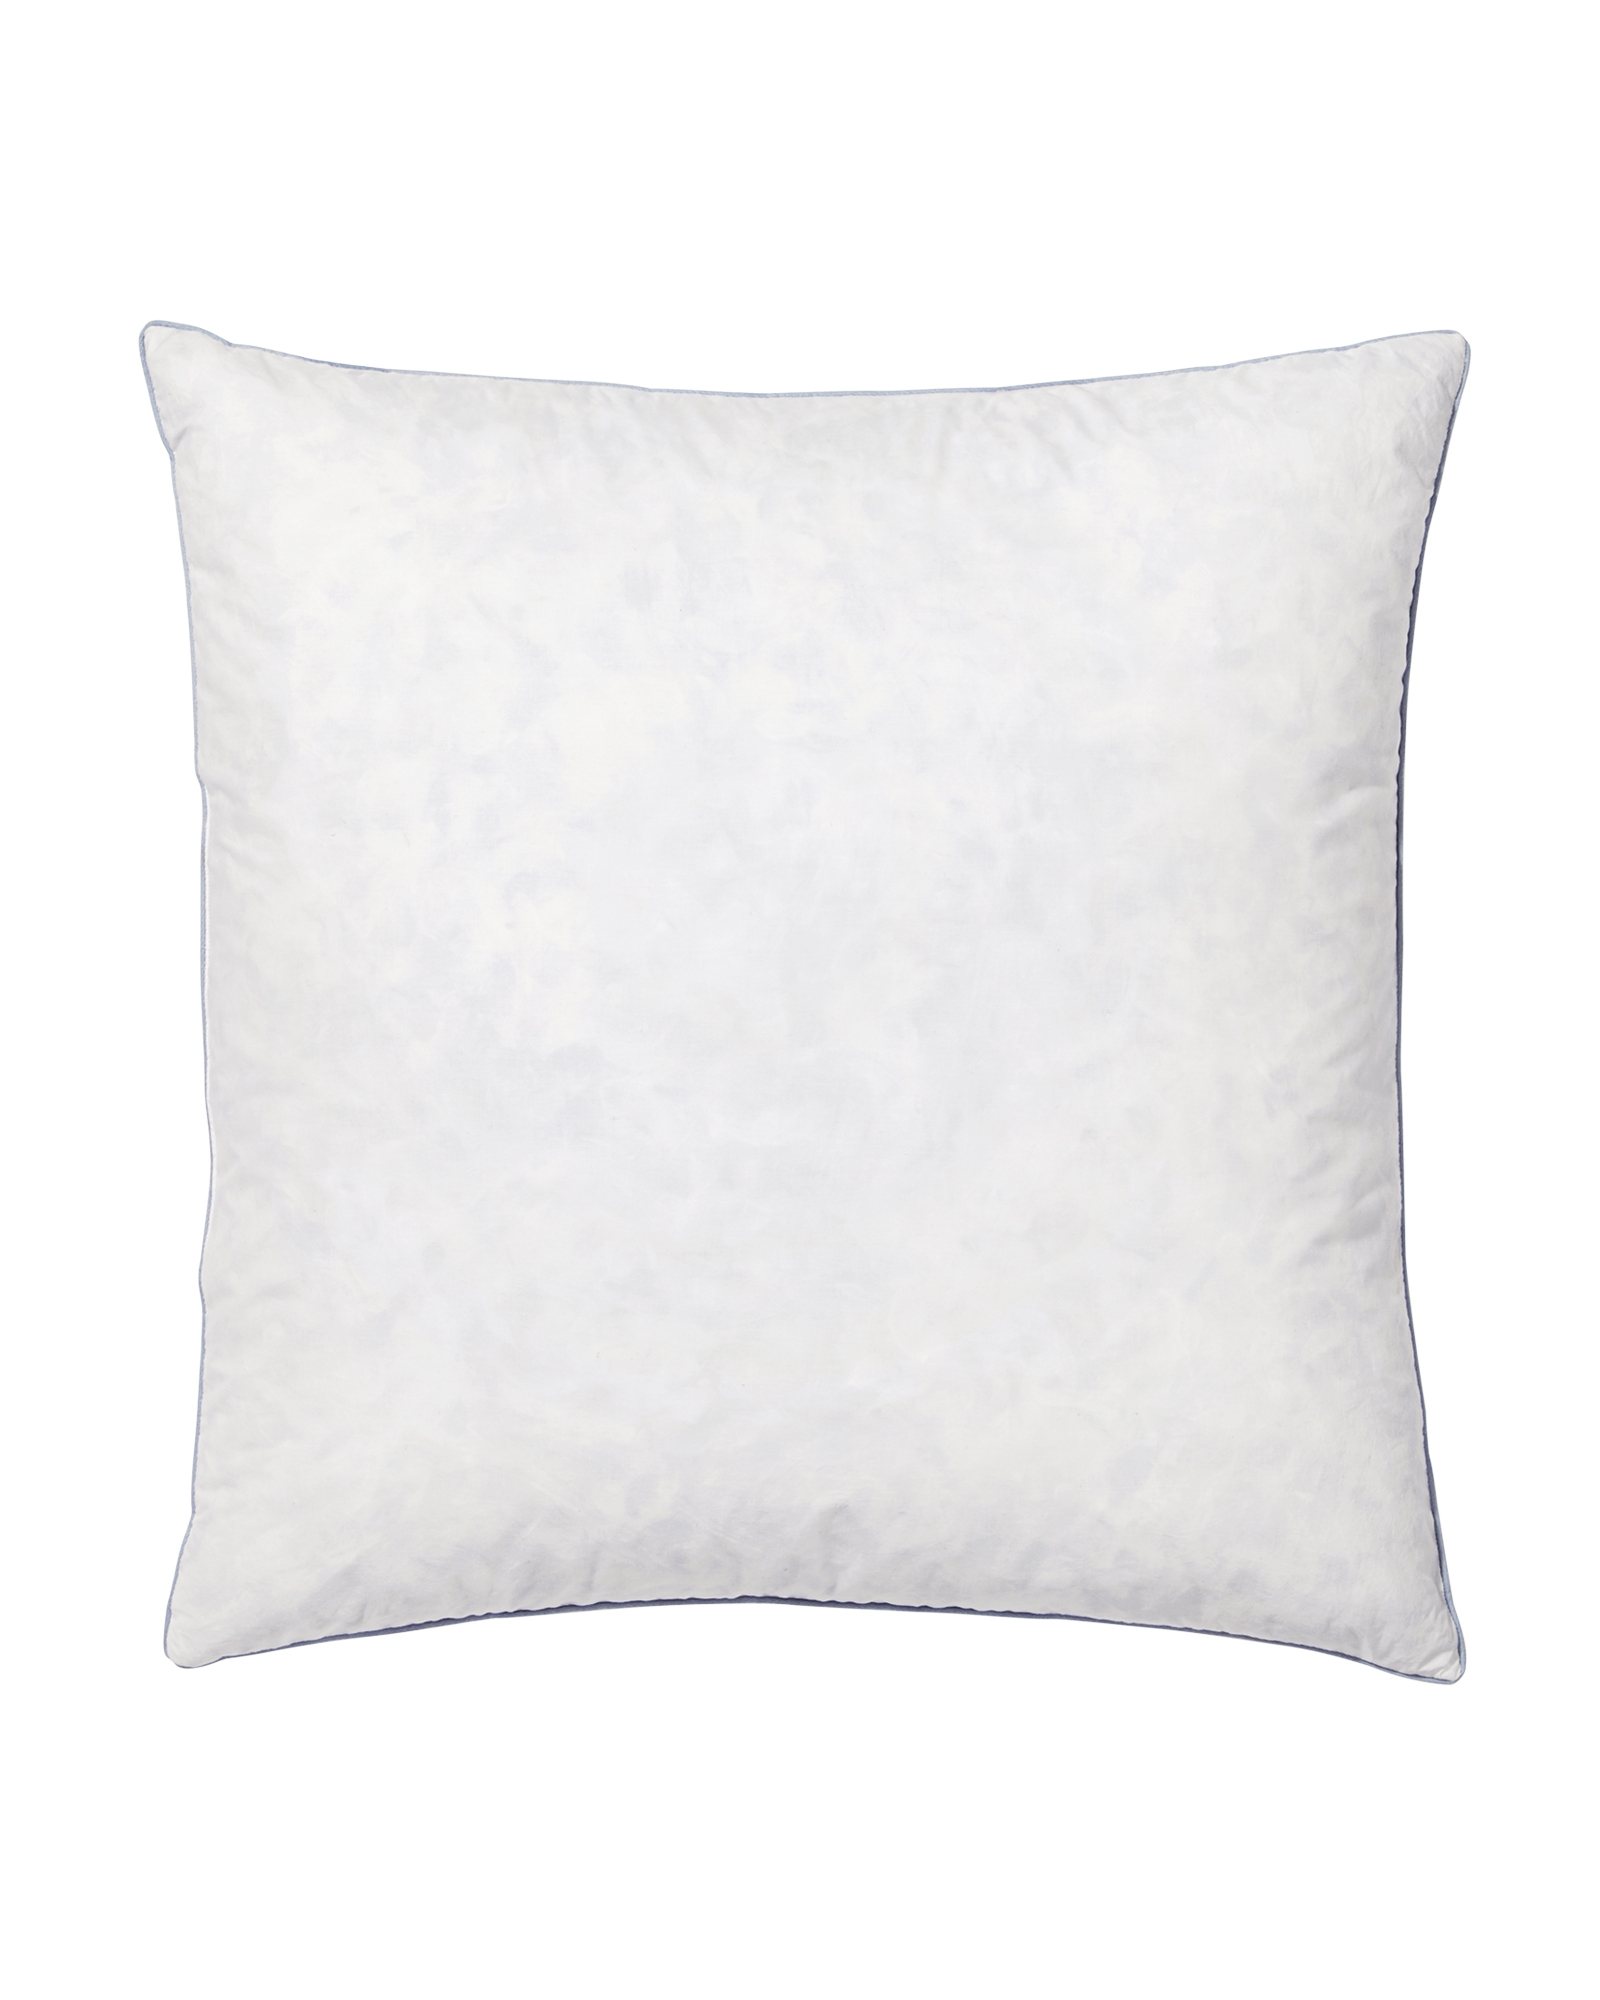 Euro Pillow Insert, Premium, Down Alternative - 26"x26" - Image 0